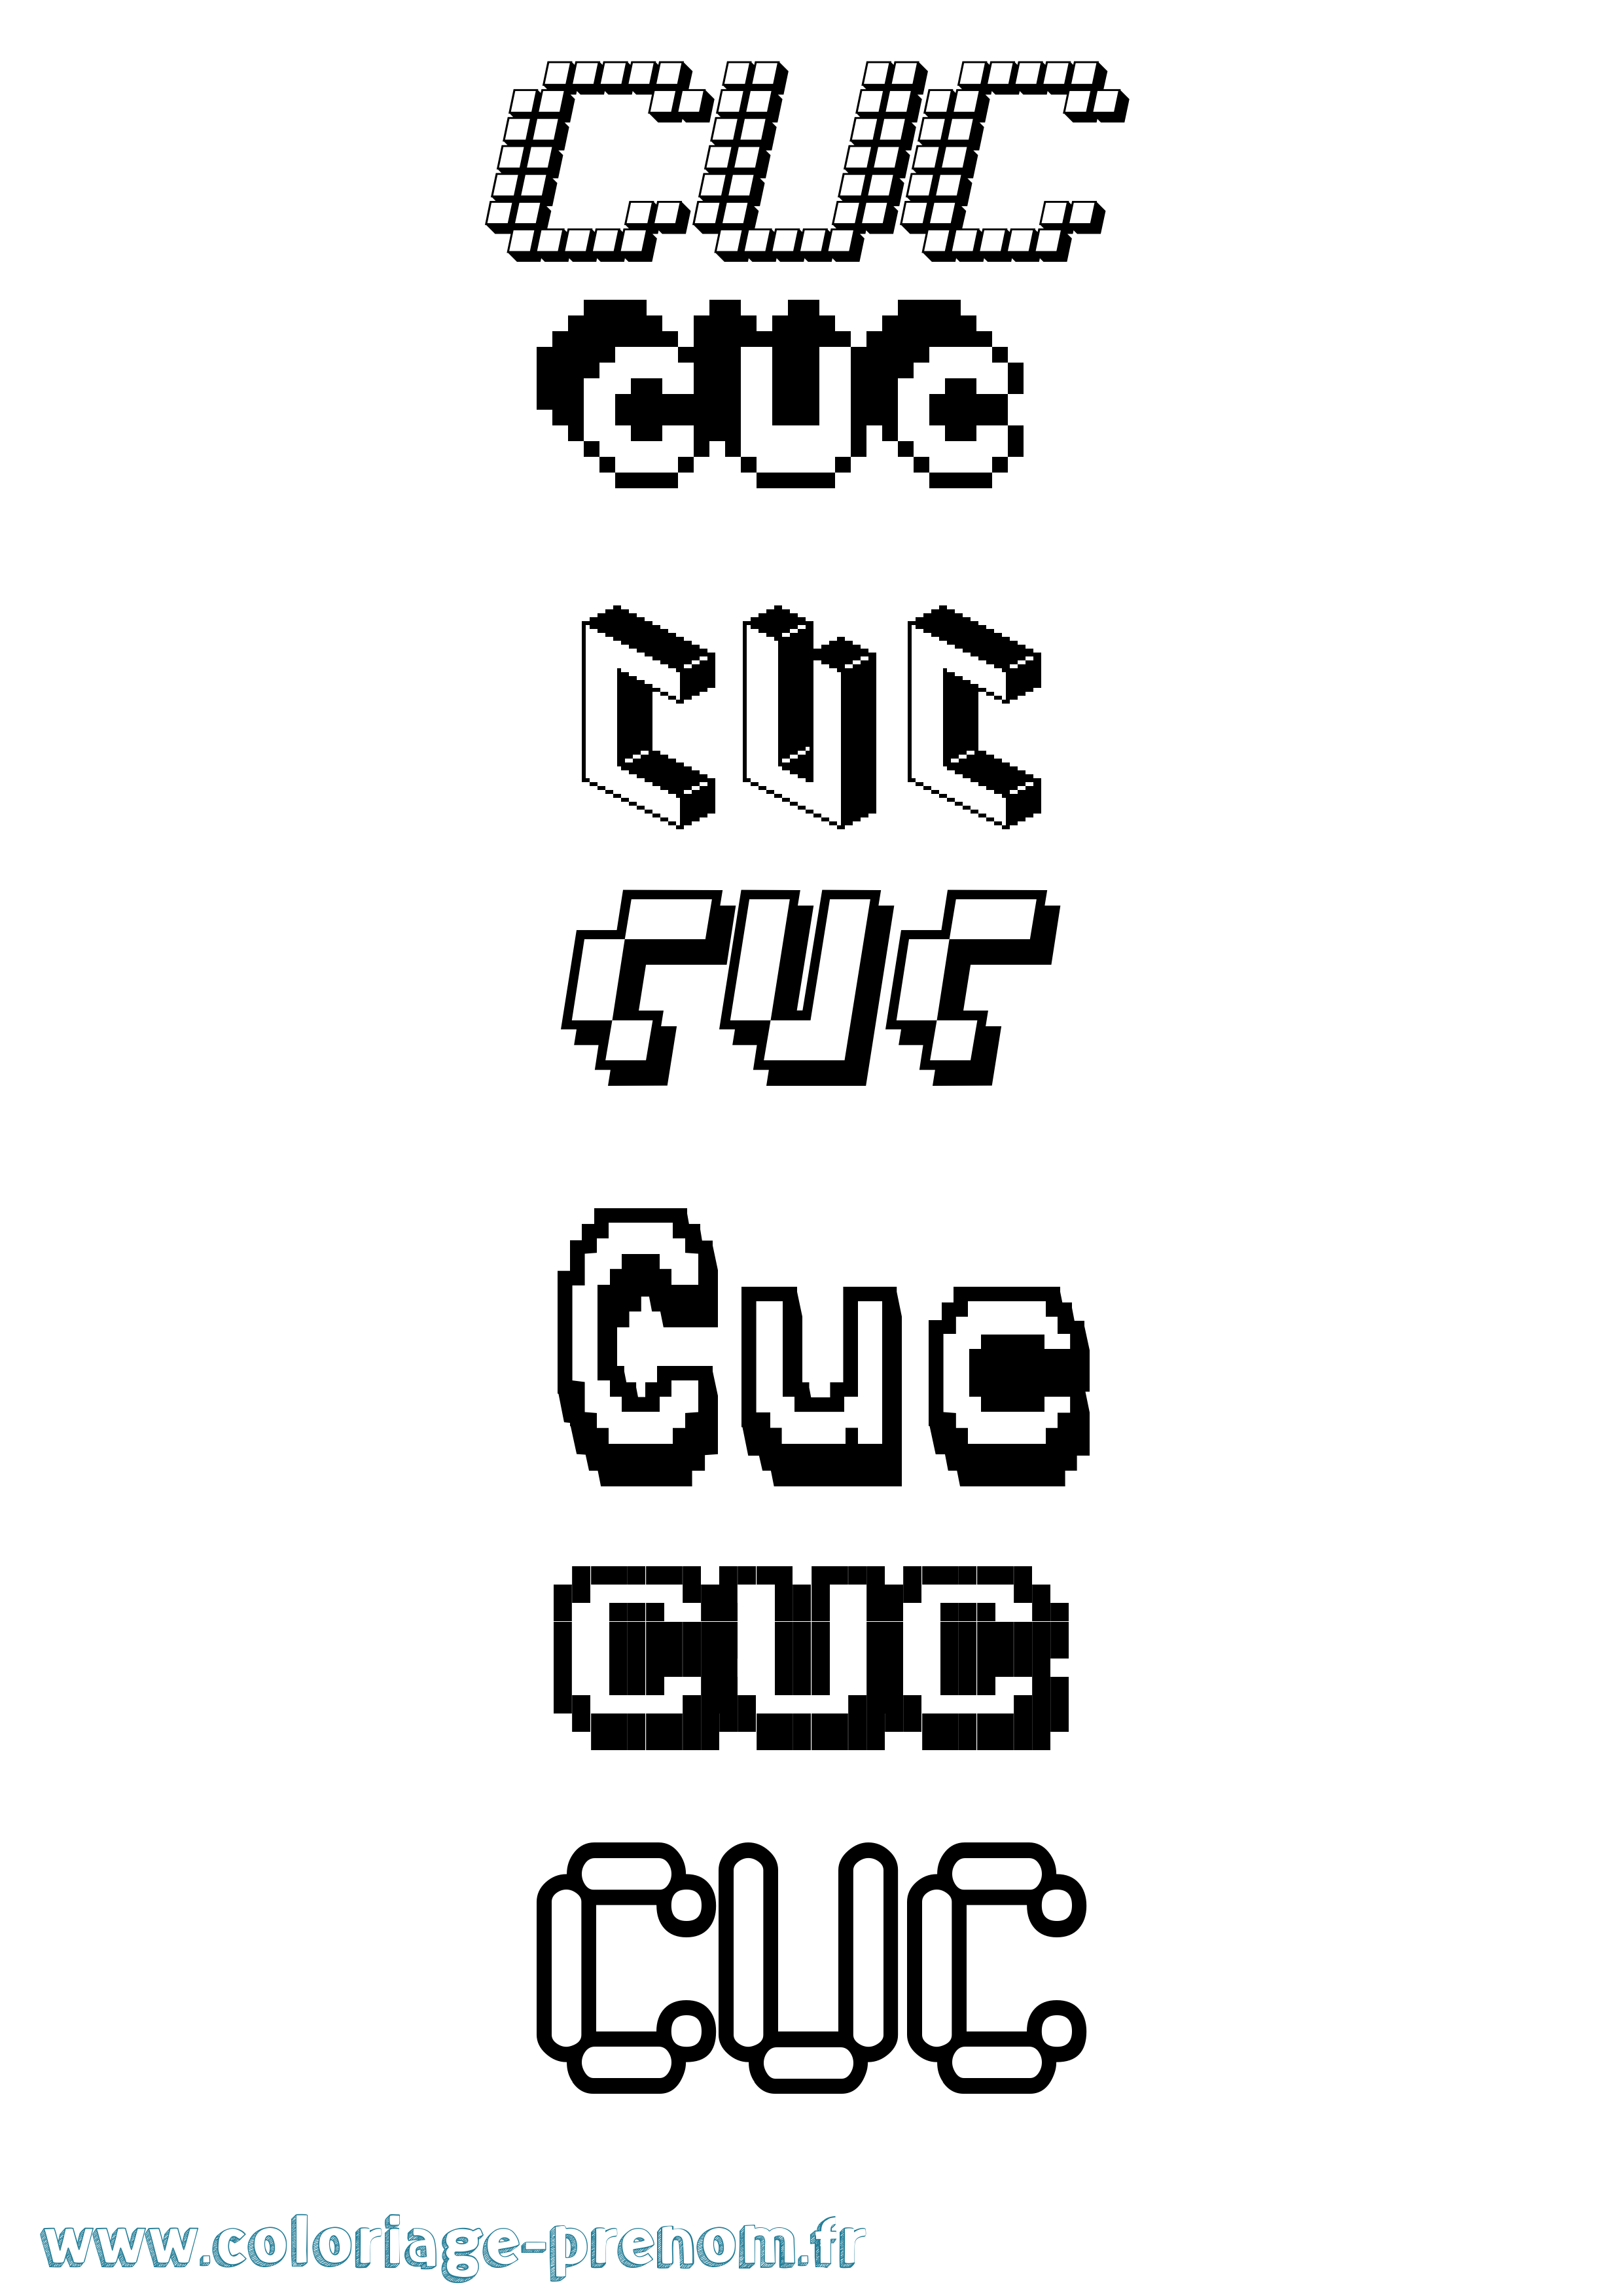 Coloriage prénom Cuc Pixel